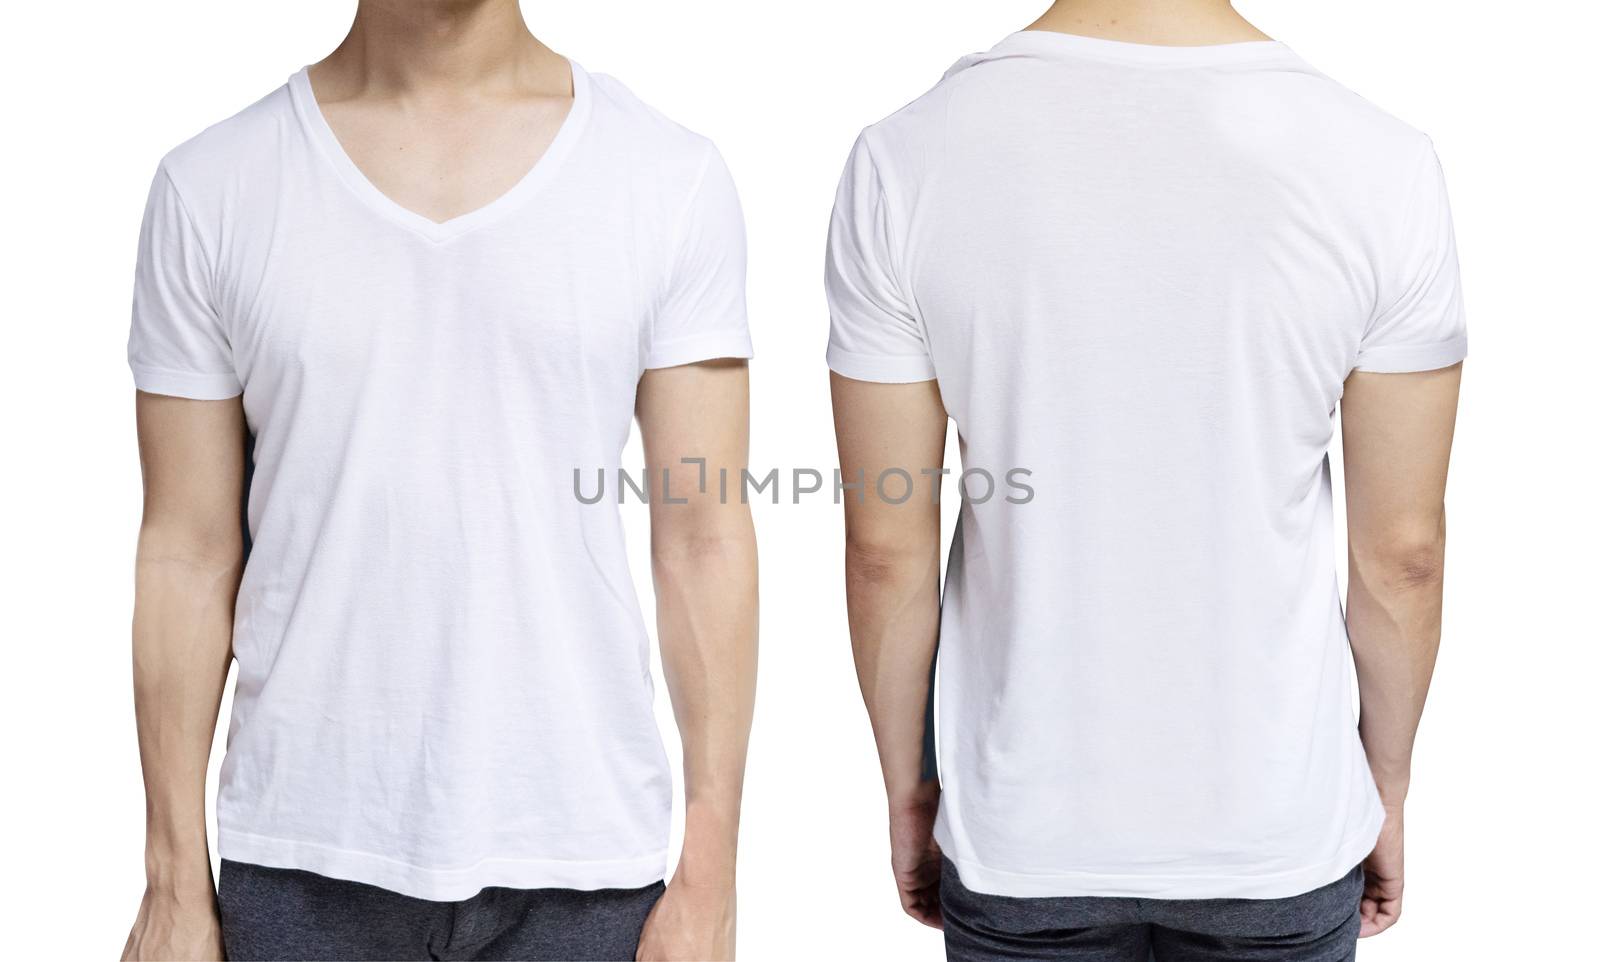 White blank v-neck t-shirt on human body for graphic design mock up